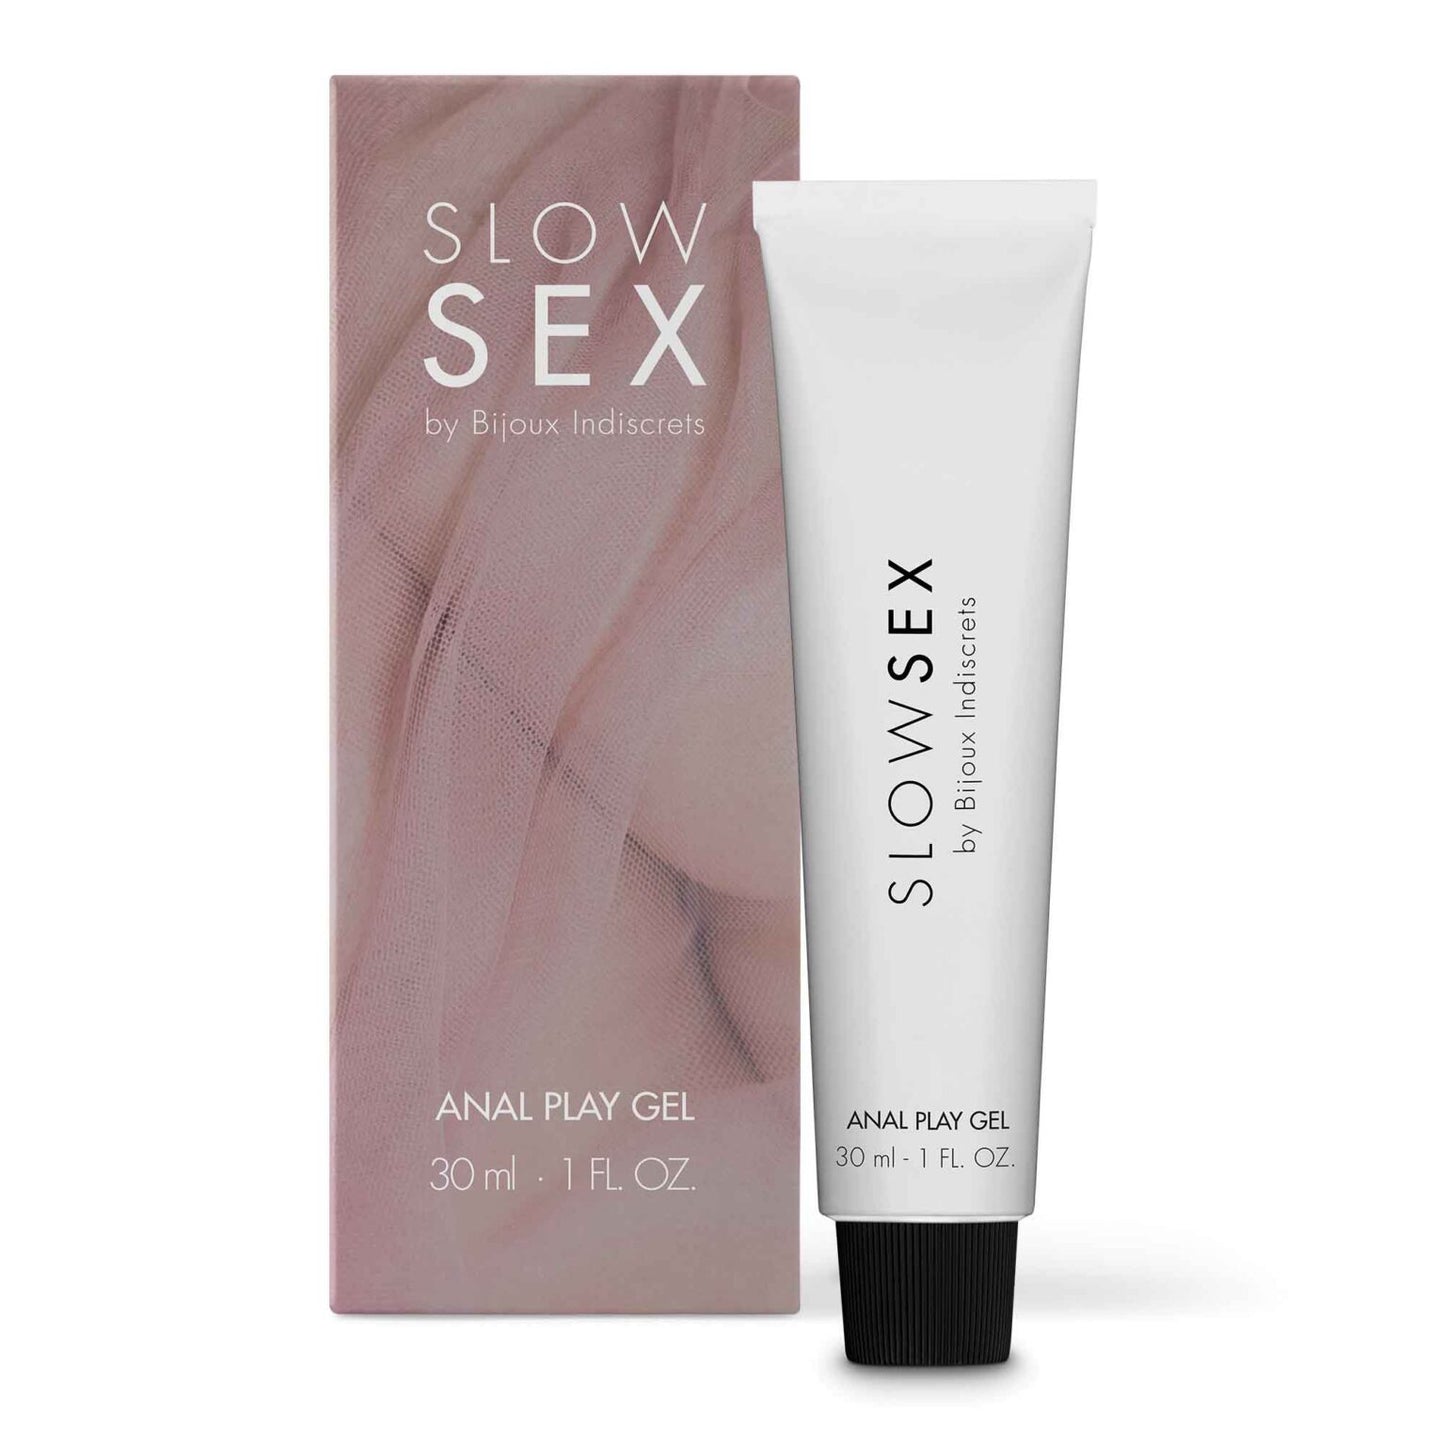 Anal play gel – SLOW SEX